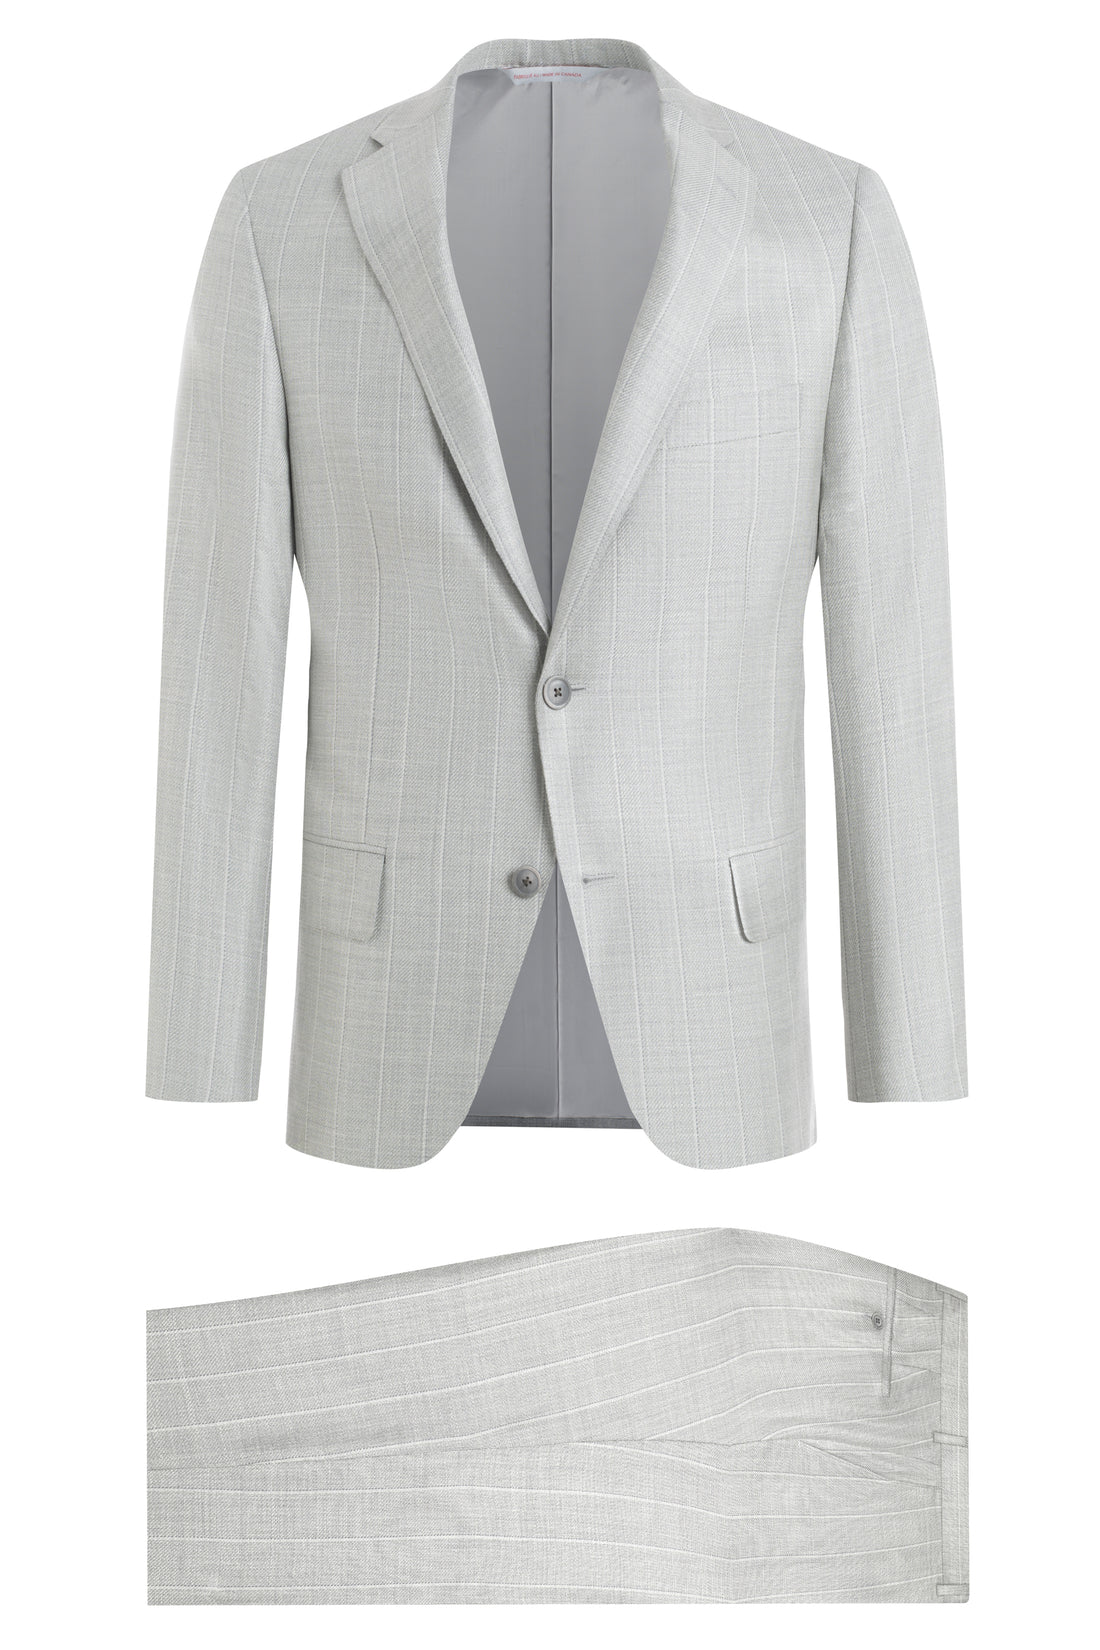 Mist Grey Linen Wool and Silk Trim Fit Suit